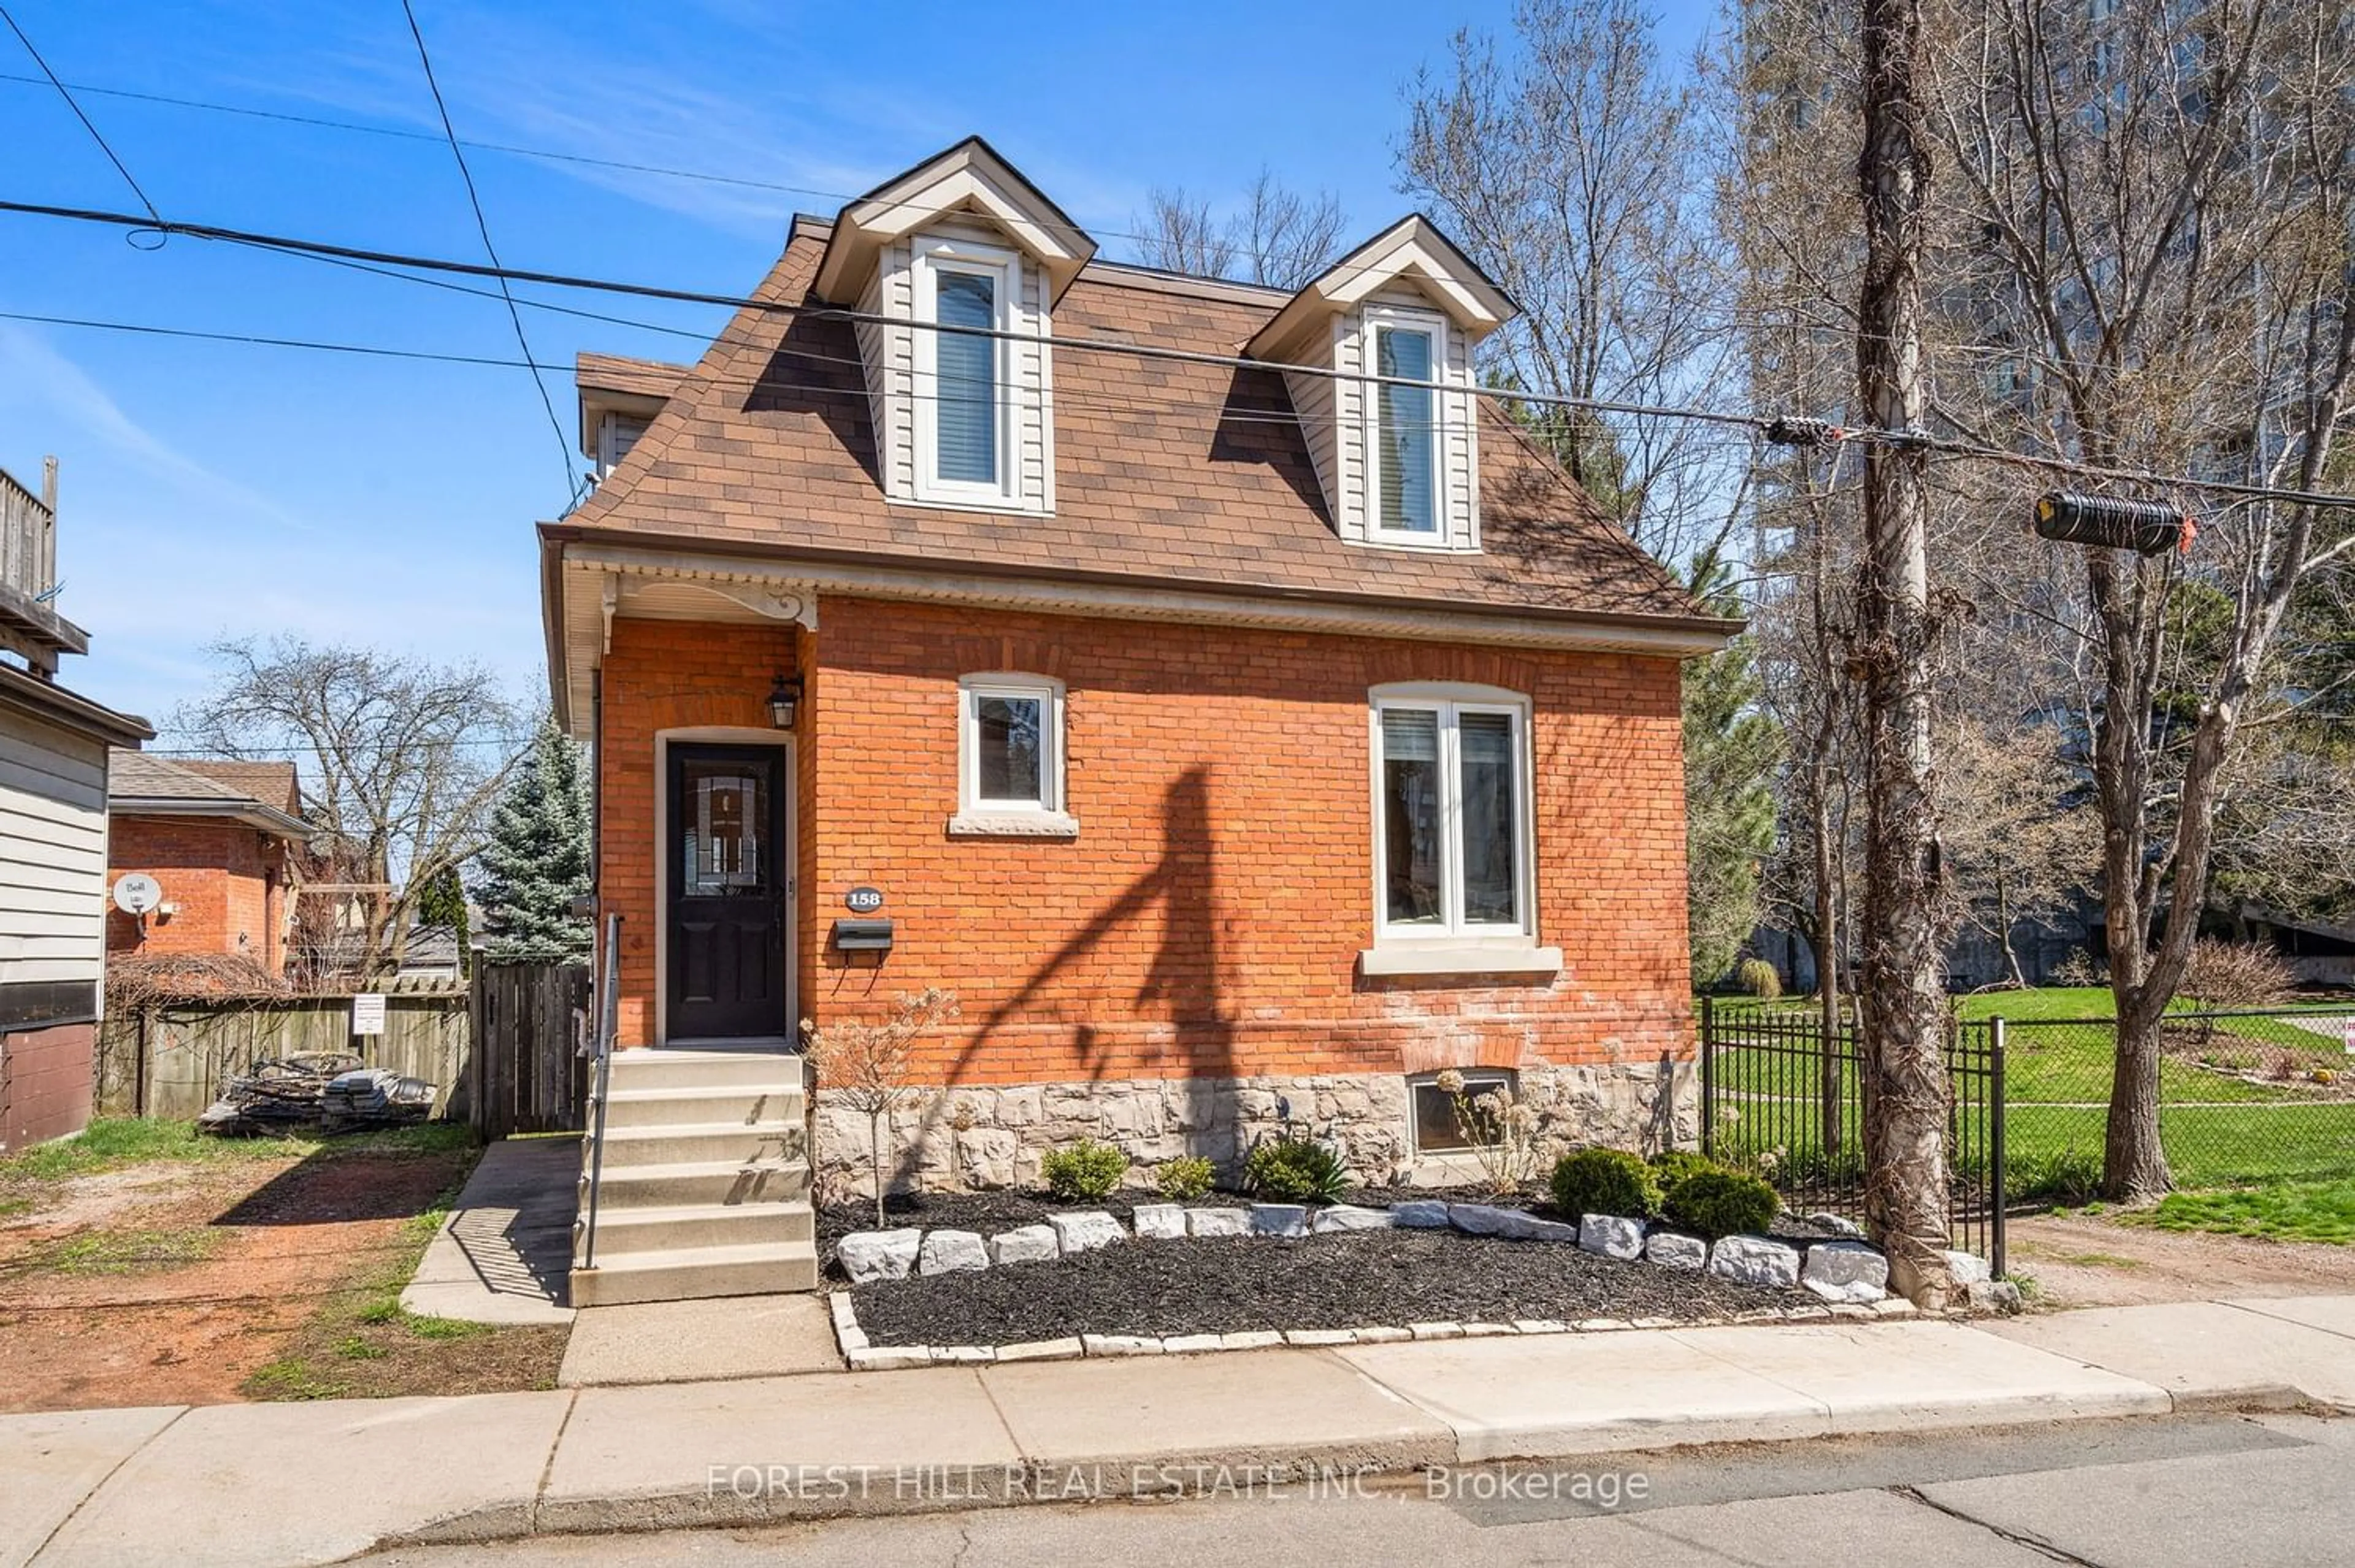 Home with brick exterior material for 158 Napier St, Hamilton Ontario L8R 1S4